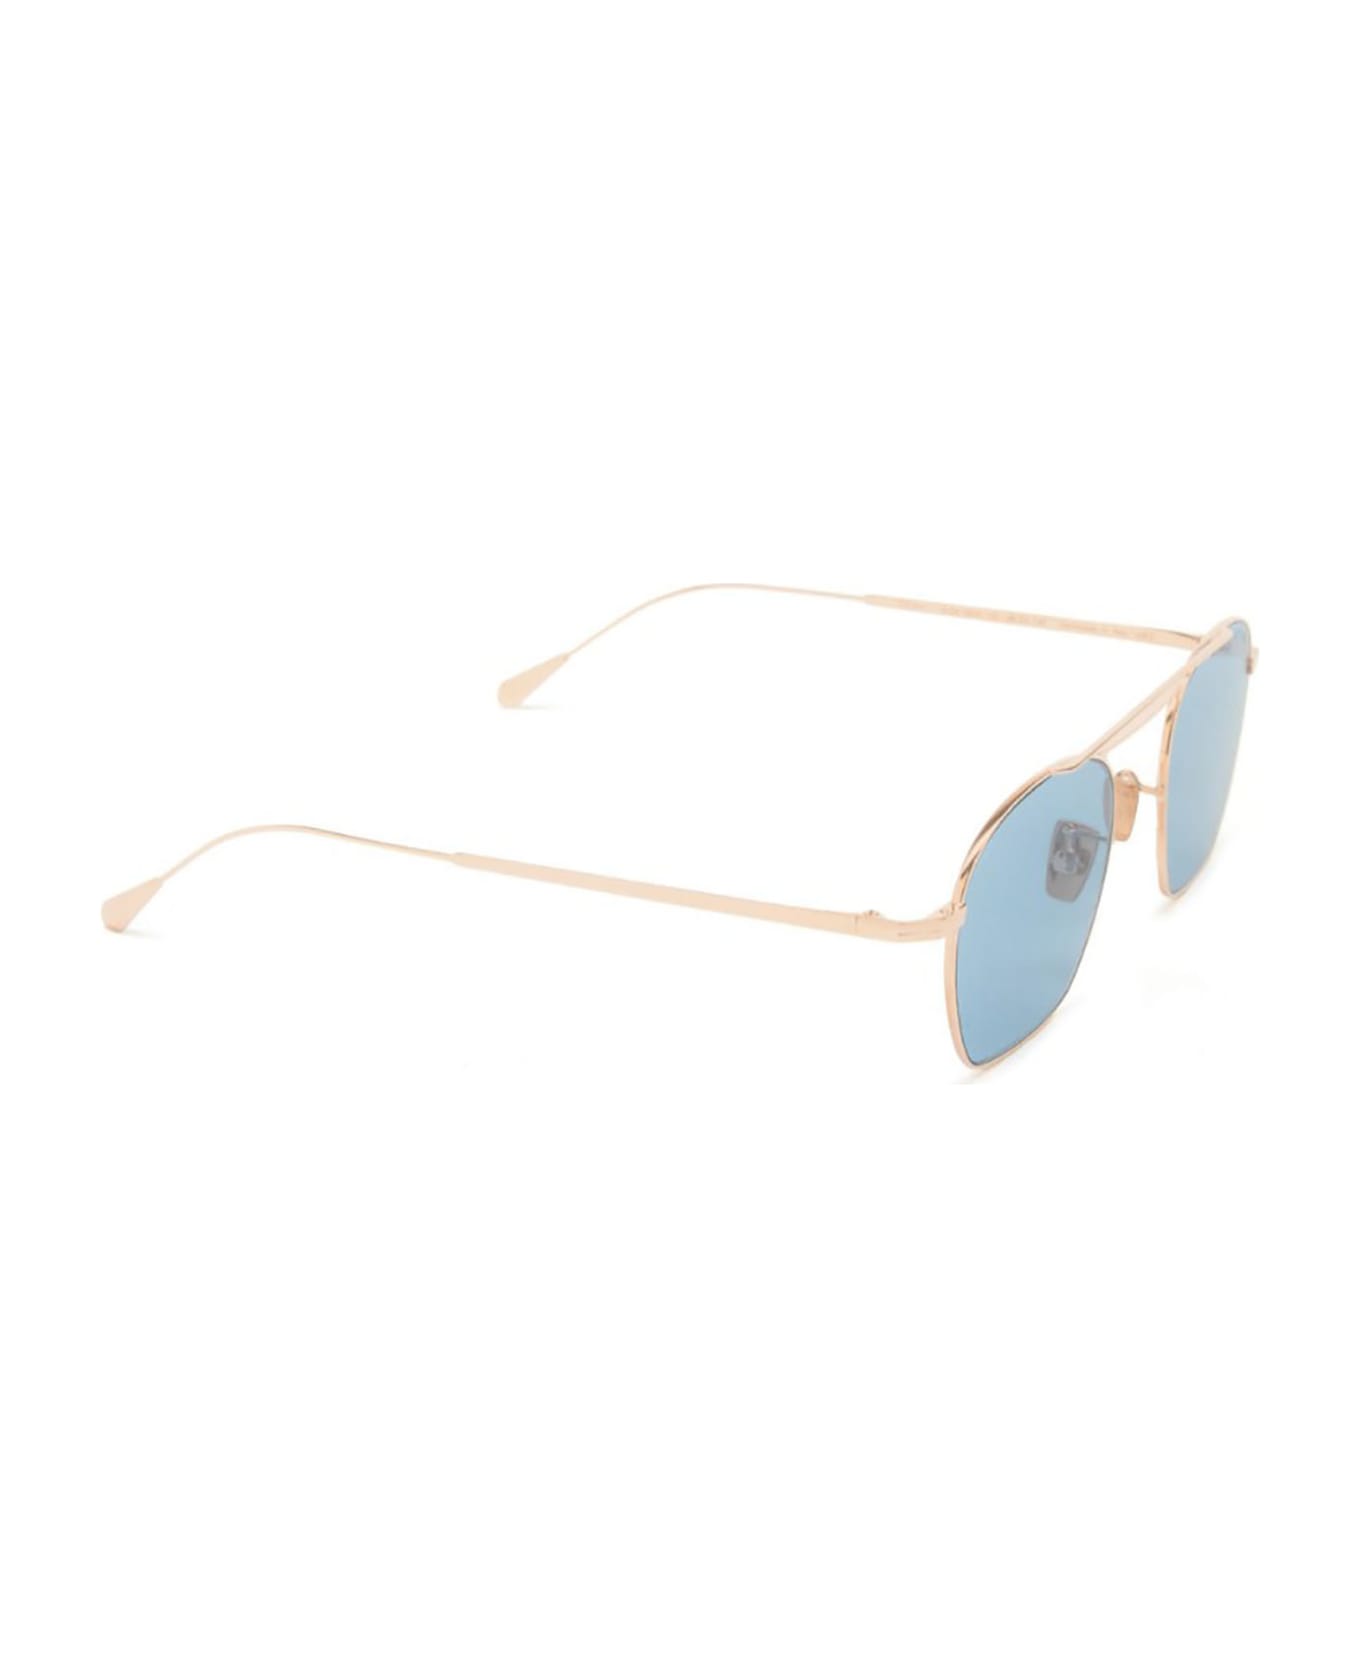 Cutler and Gross 0004 Sunglasses - Rose Gold サングラス